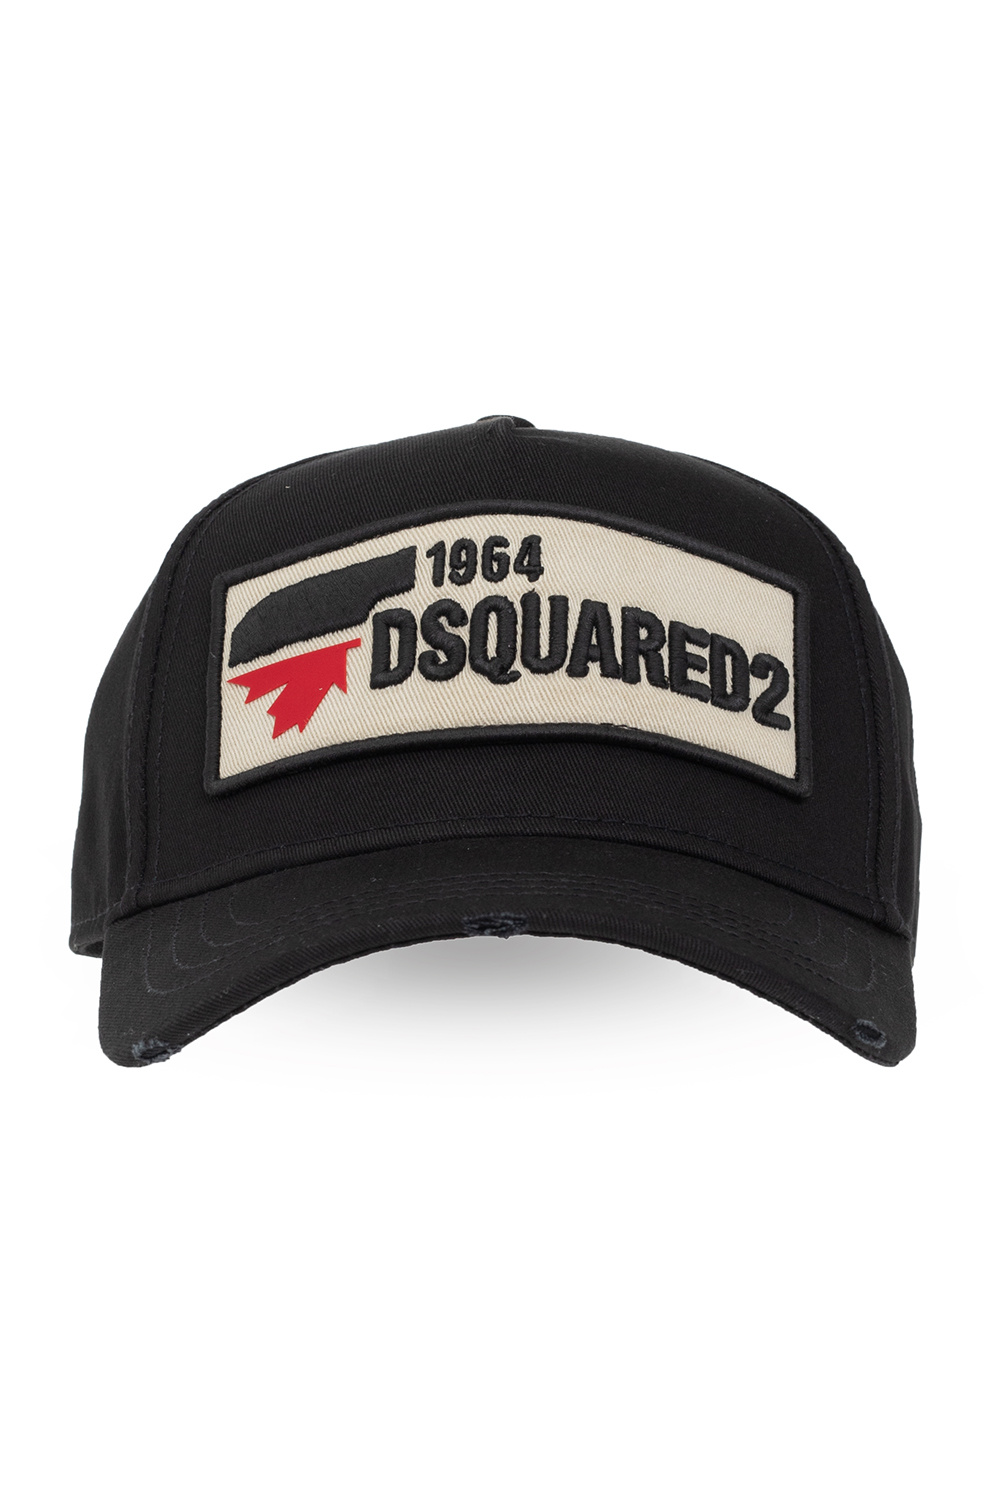 Dsquared2 caps usb office-accessories